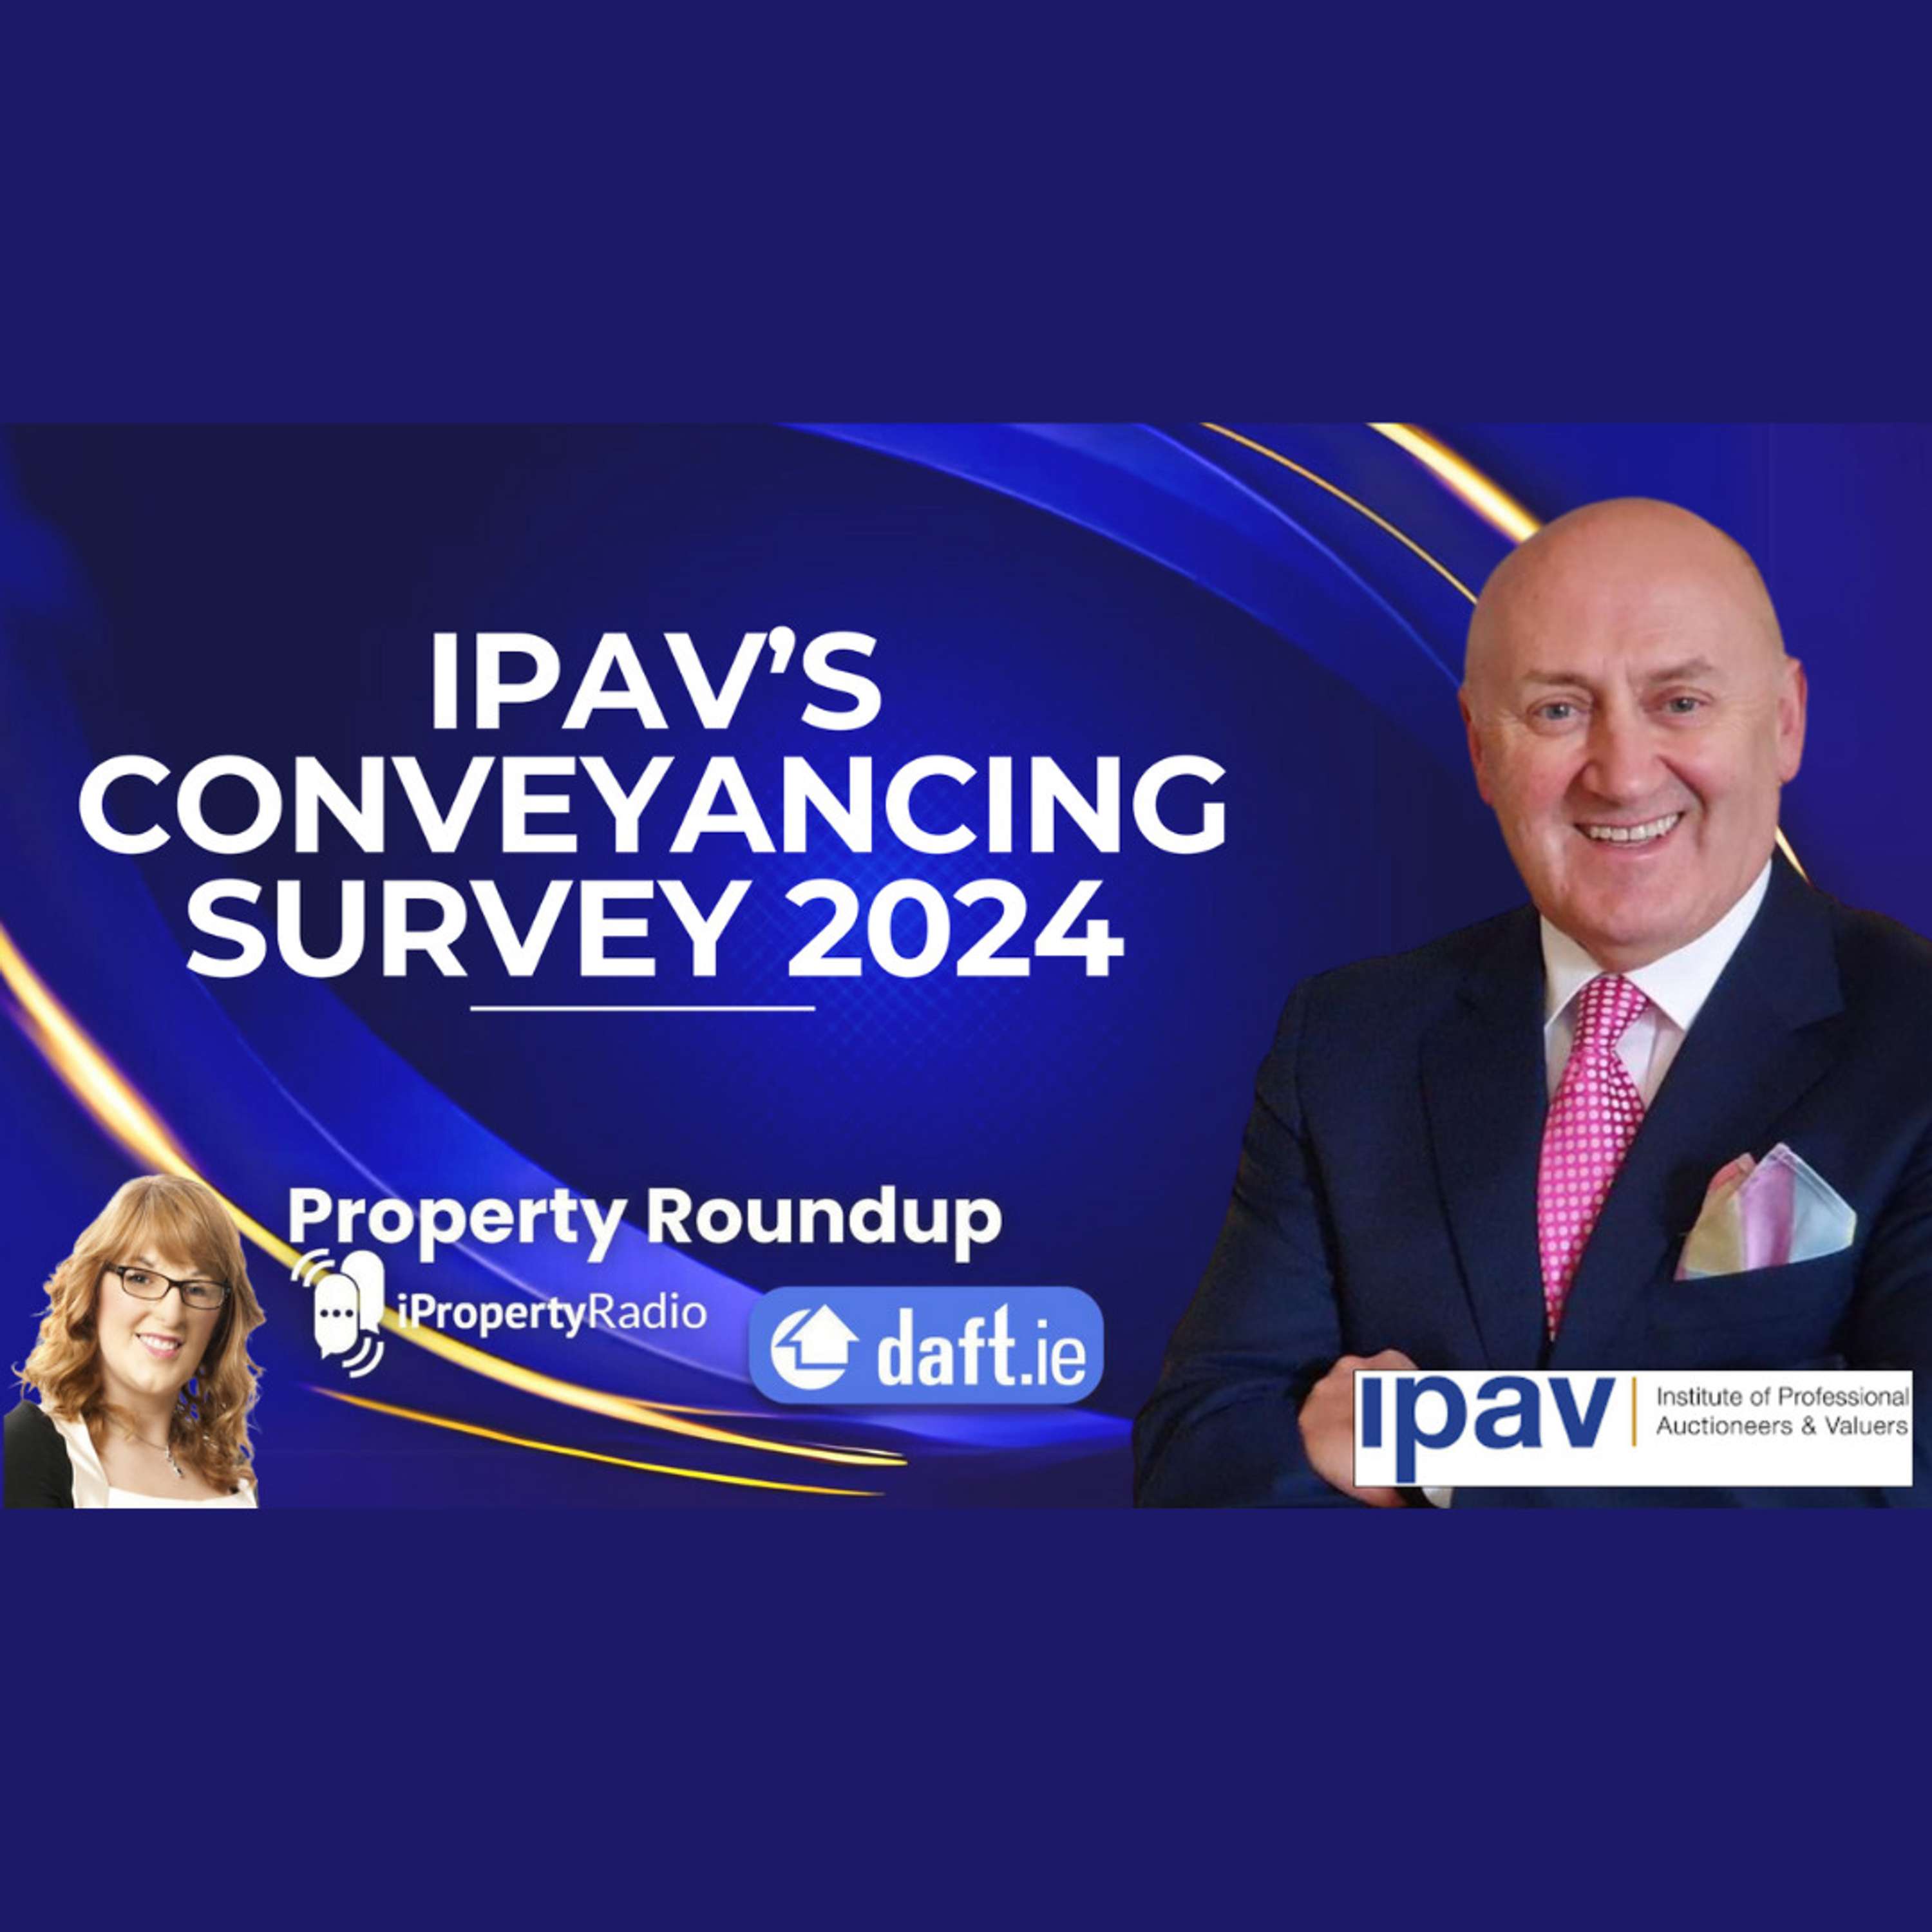 IPAV's Conveyancing Survey 2024